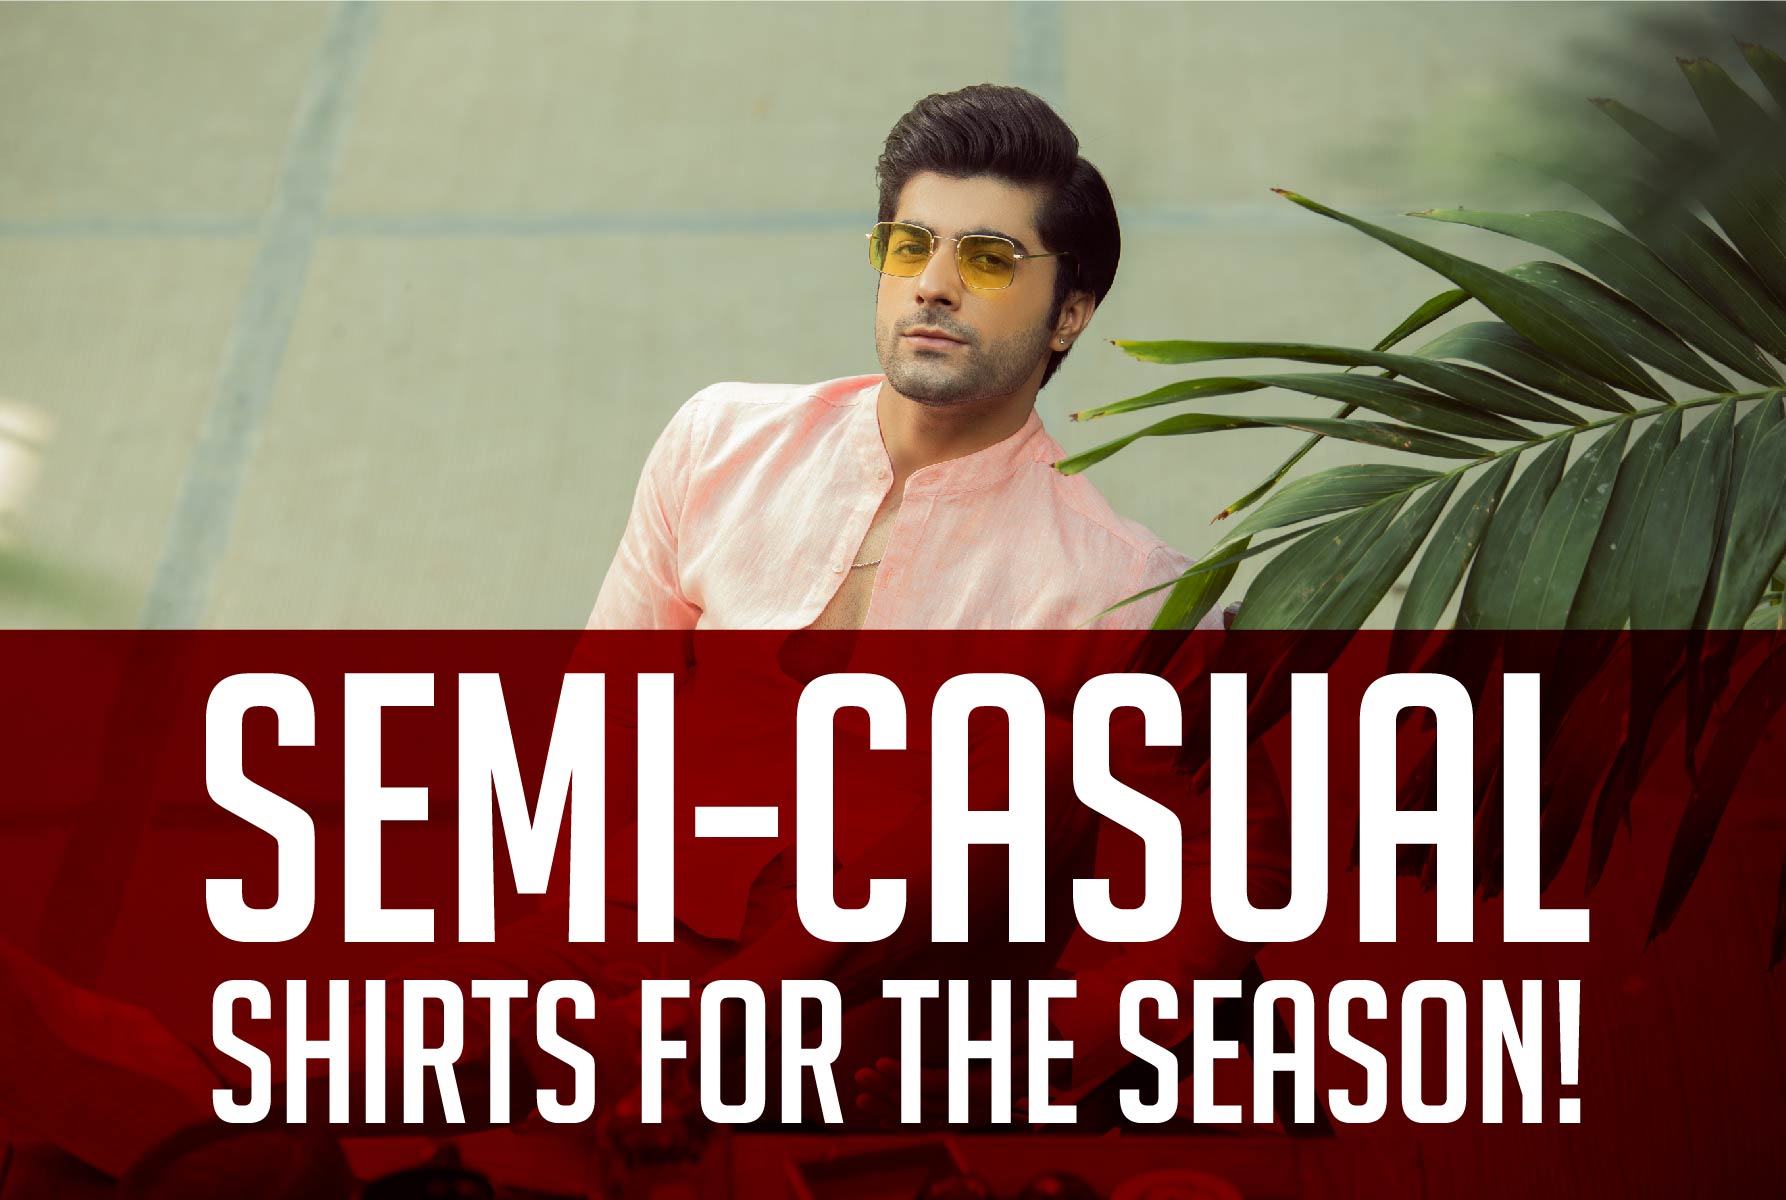 Semi casual shirts for the season!